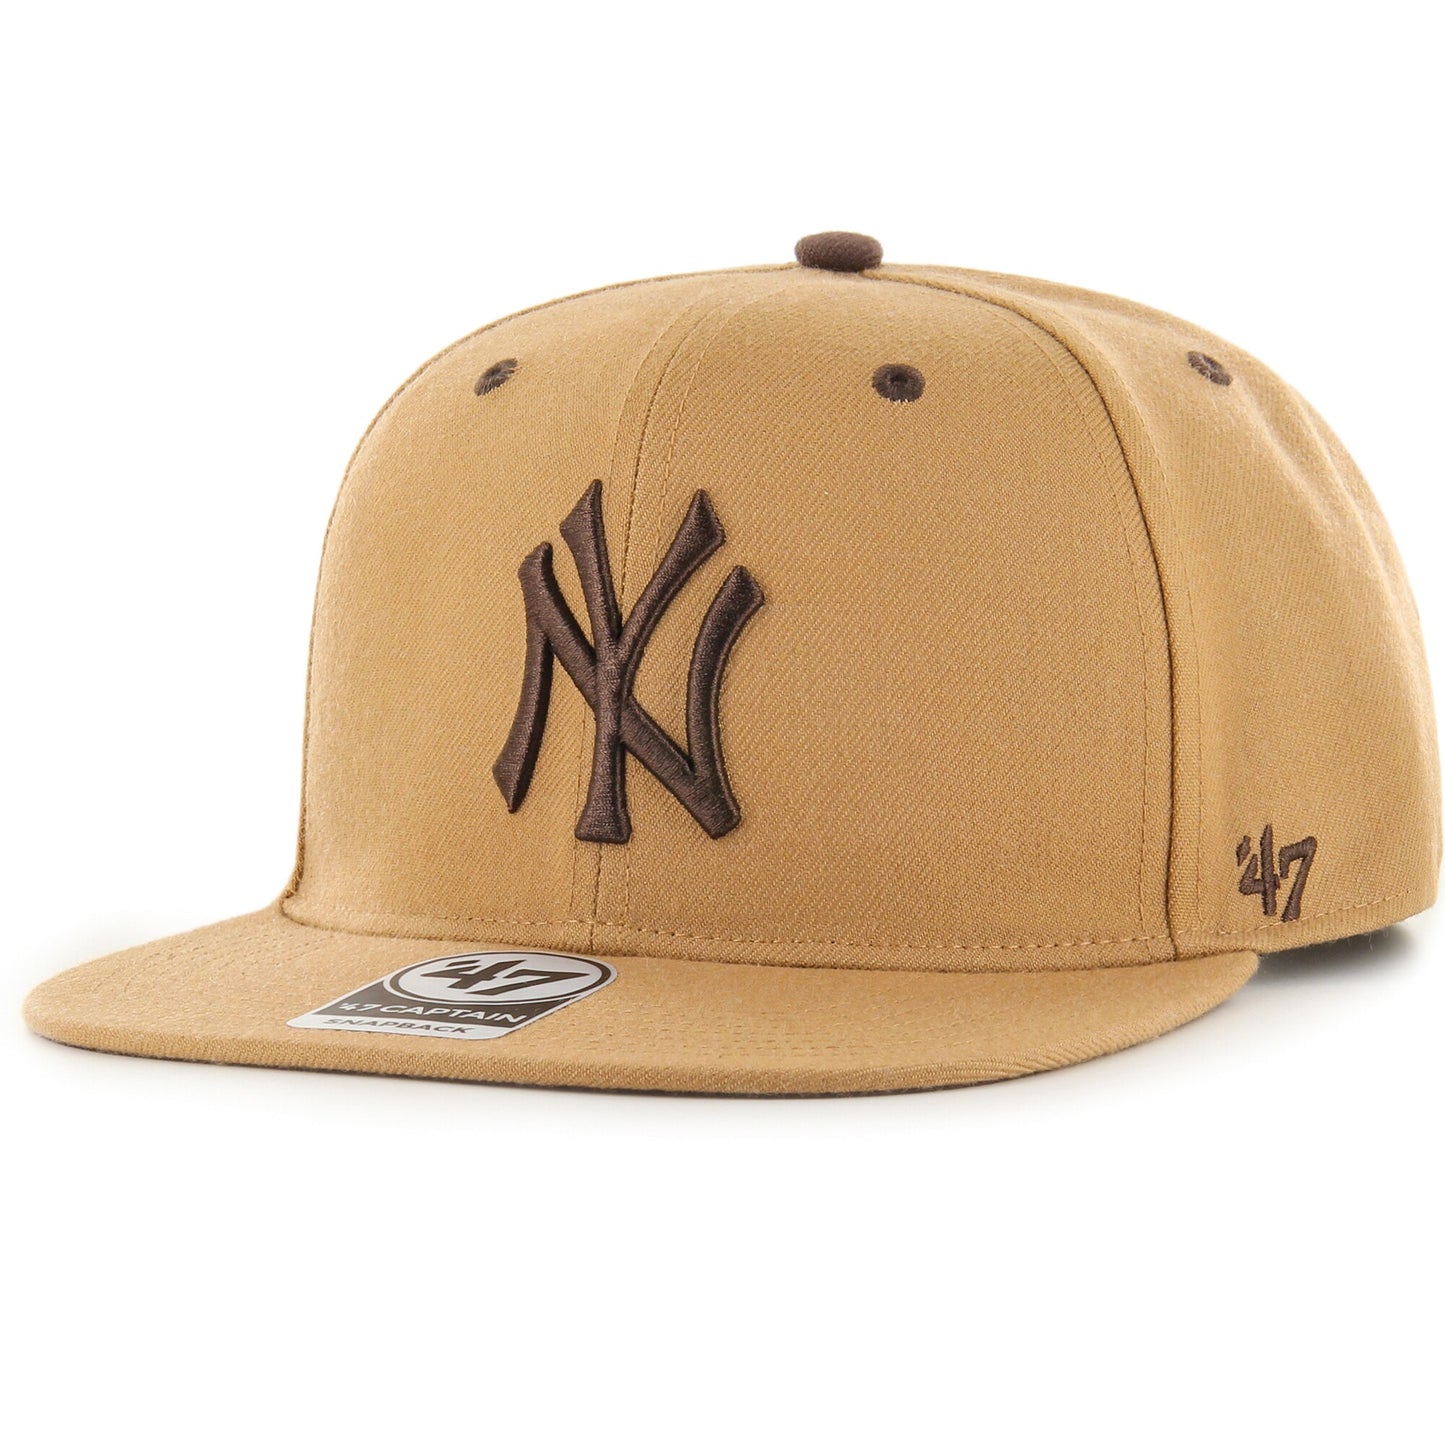 New York Yankees '47 Captain Snapback Hat - Toffee